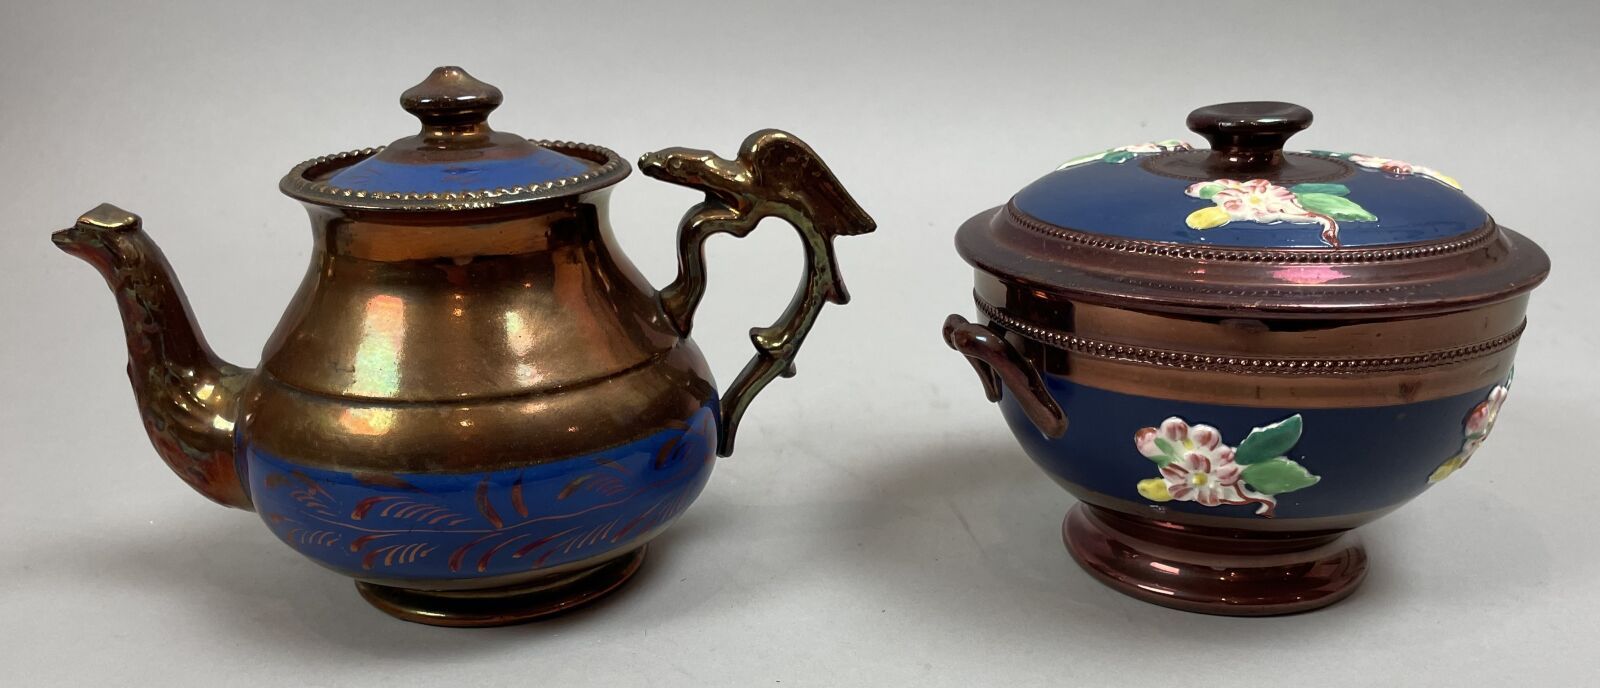 Null 一个蓝色的 "老鹰 "茶壶，有一个鸟头的壶嘴和一个卷轴手柄，上面有一只老鹰，有铜光泽和铜叶带装饰。高：13厘米。壶嘴末端有缺口；维多利亚时期。类似的模&hellip;